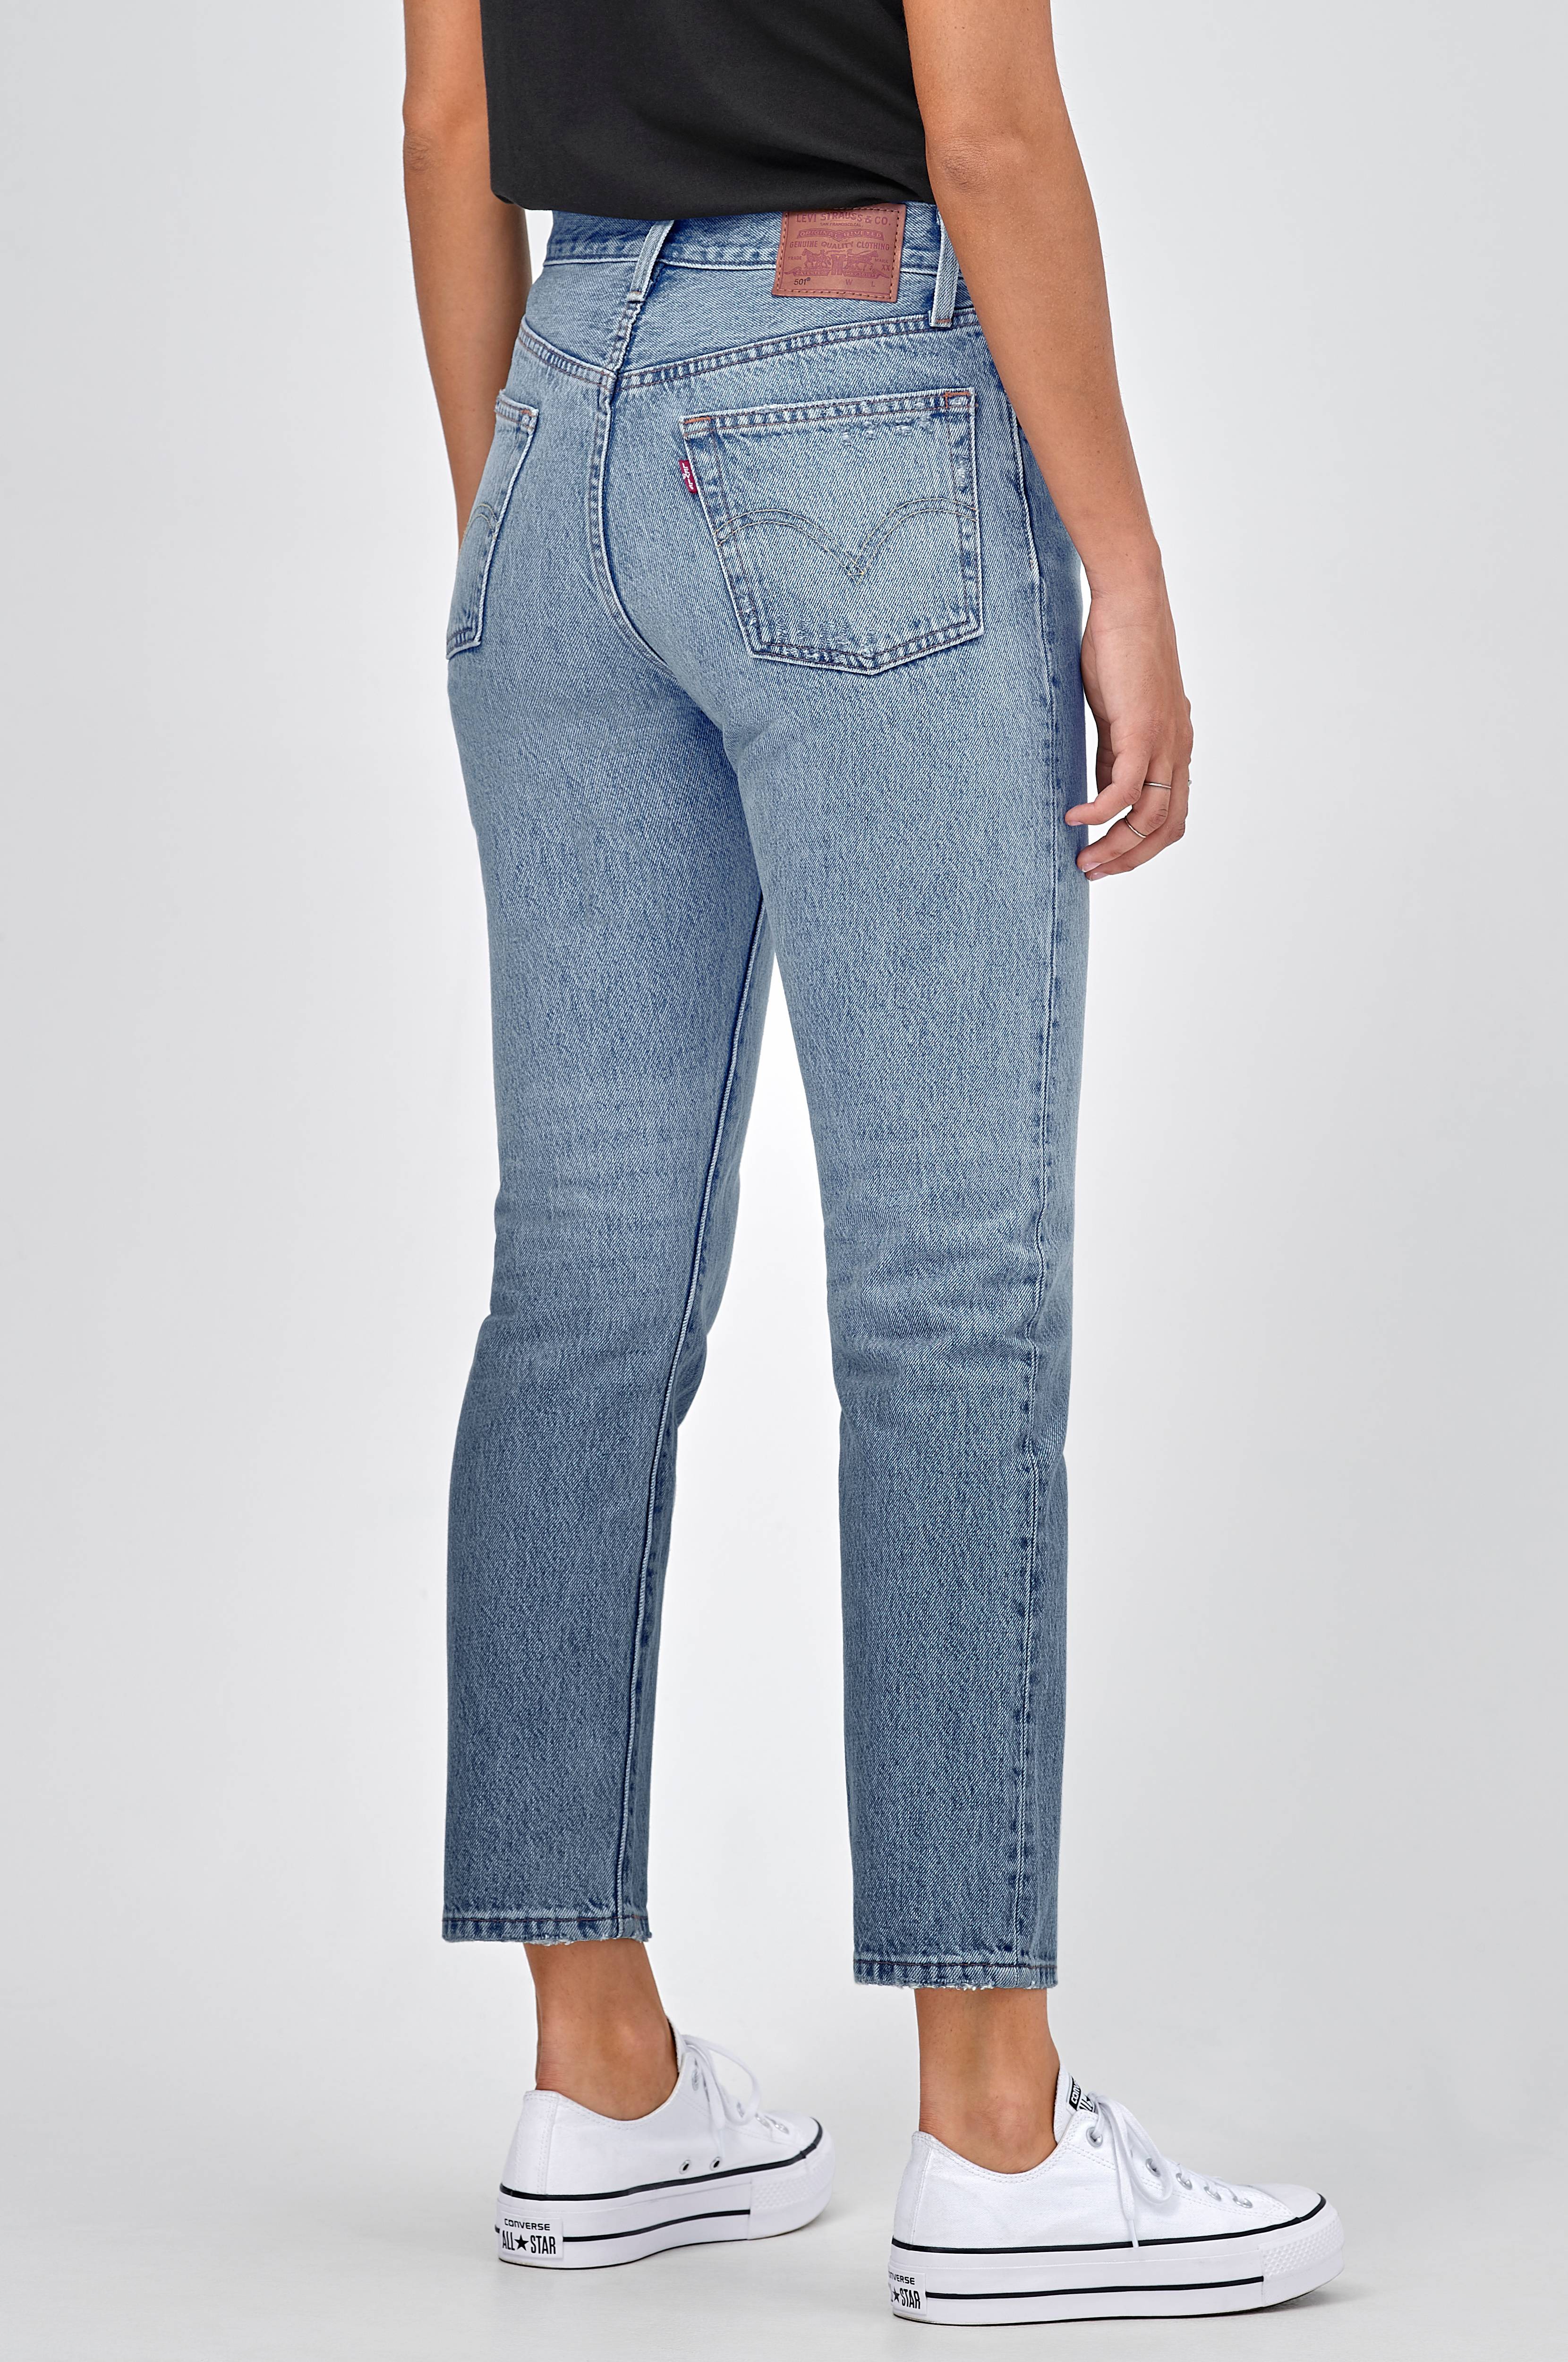 levis 501 crop jeans lovefool 